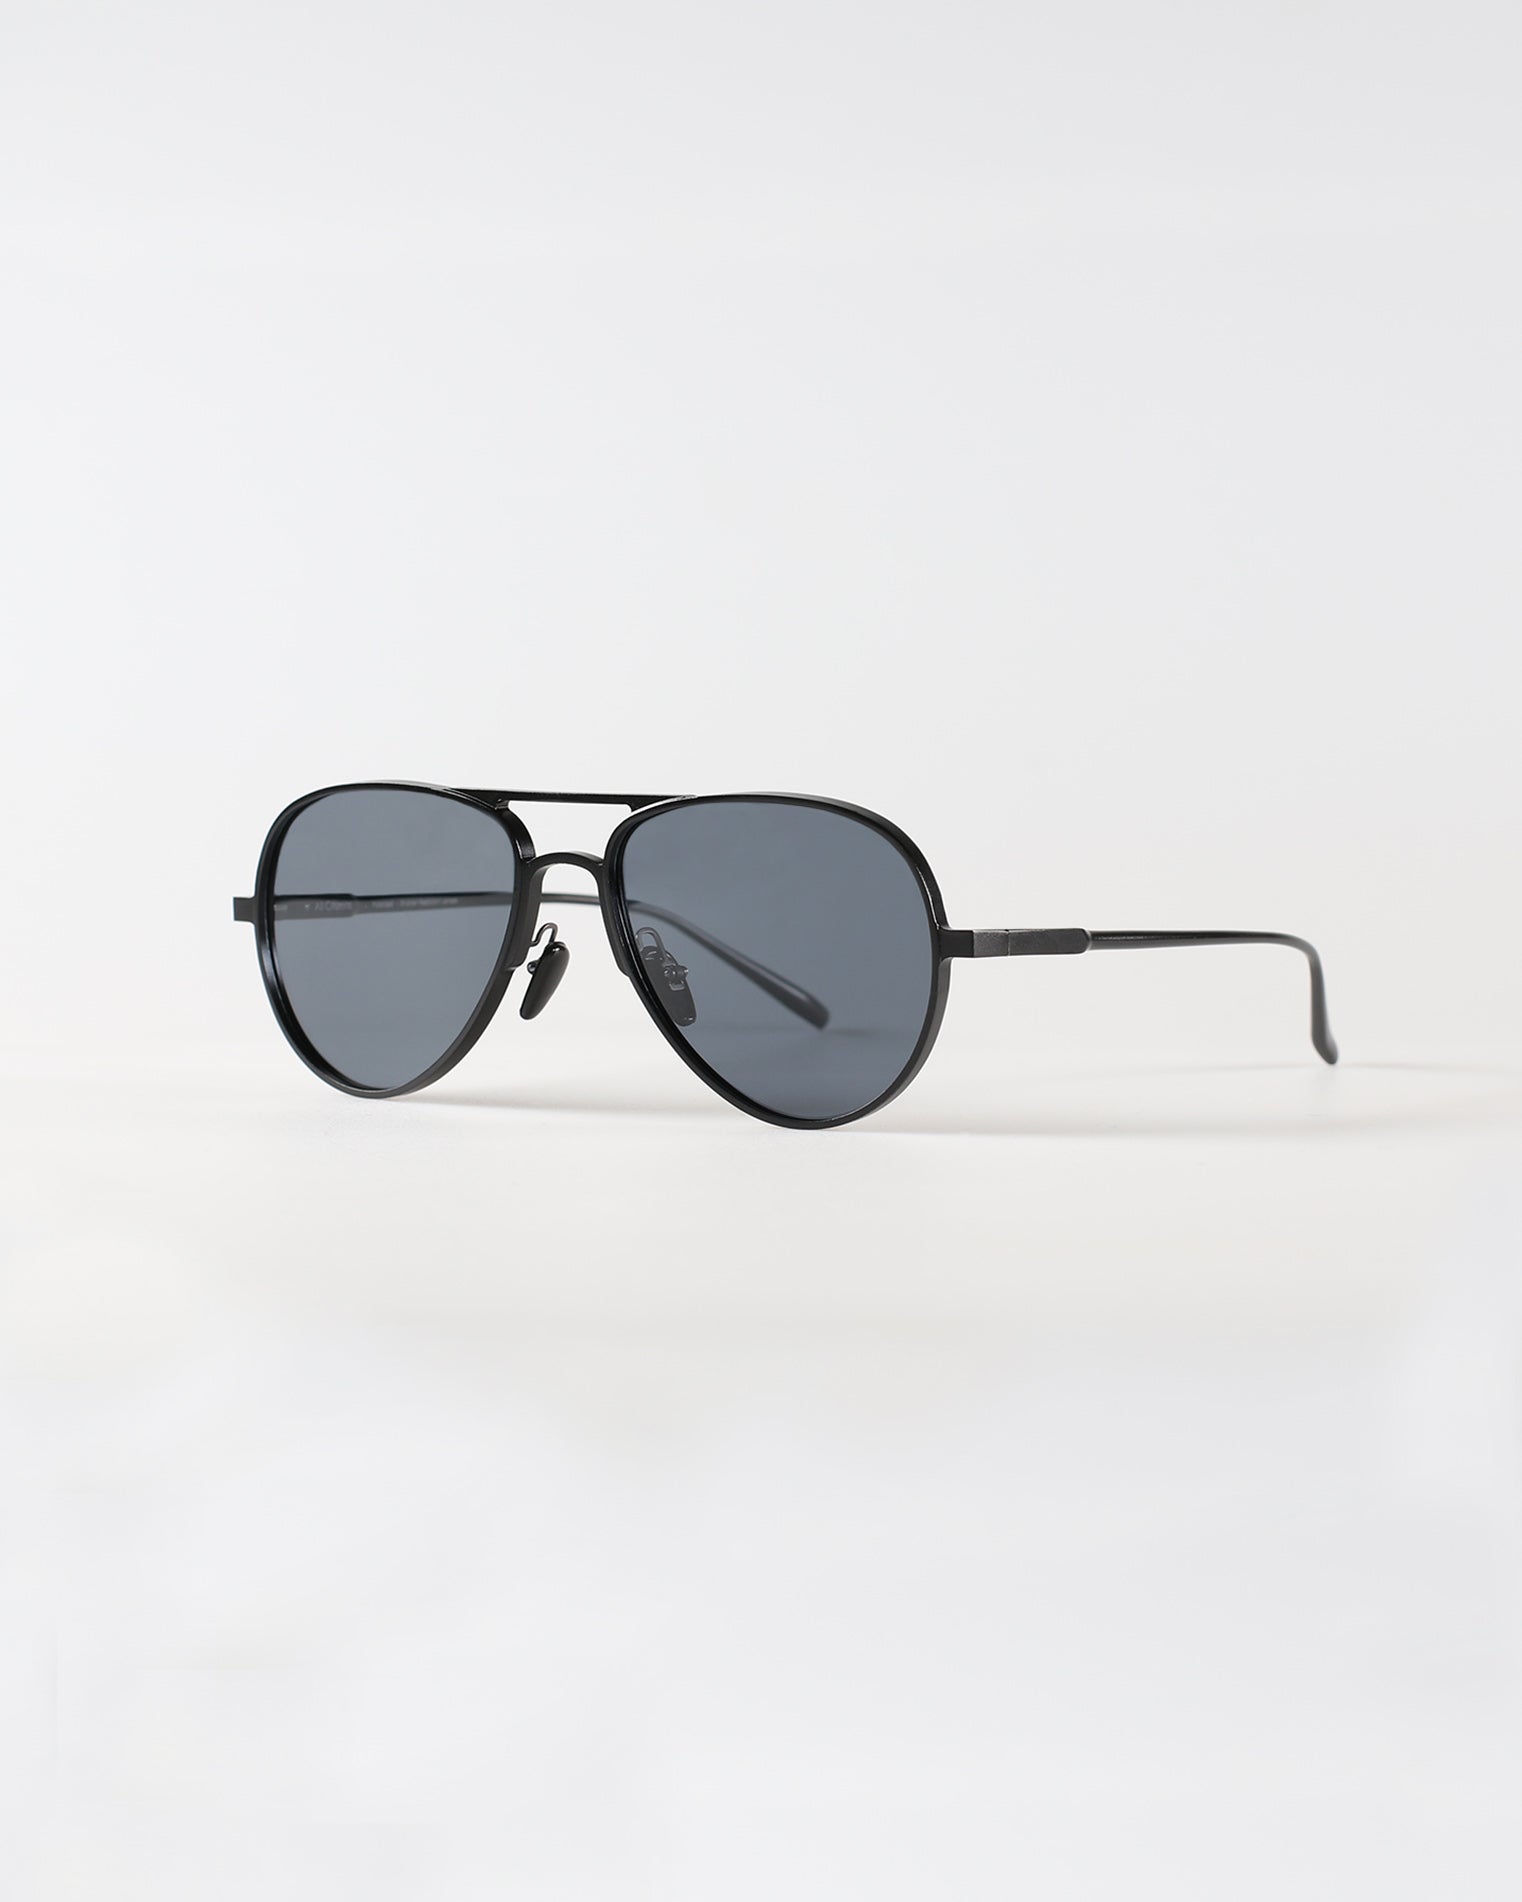 Xezo UV 400 Titanium Polarized Aviator Glasses with Steel Cable Wire, Dark Grey